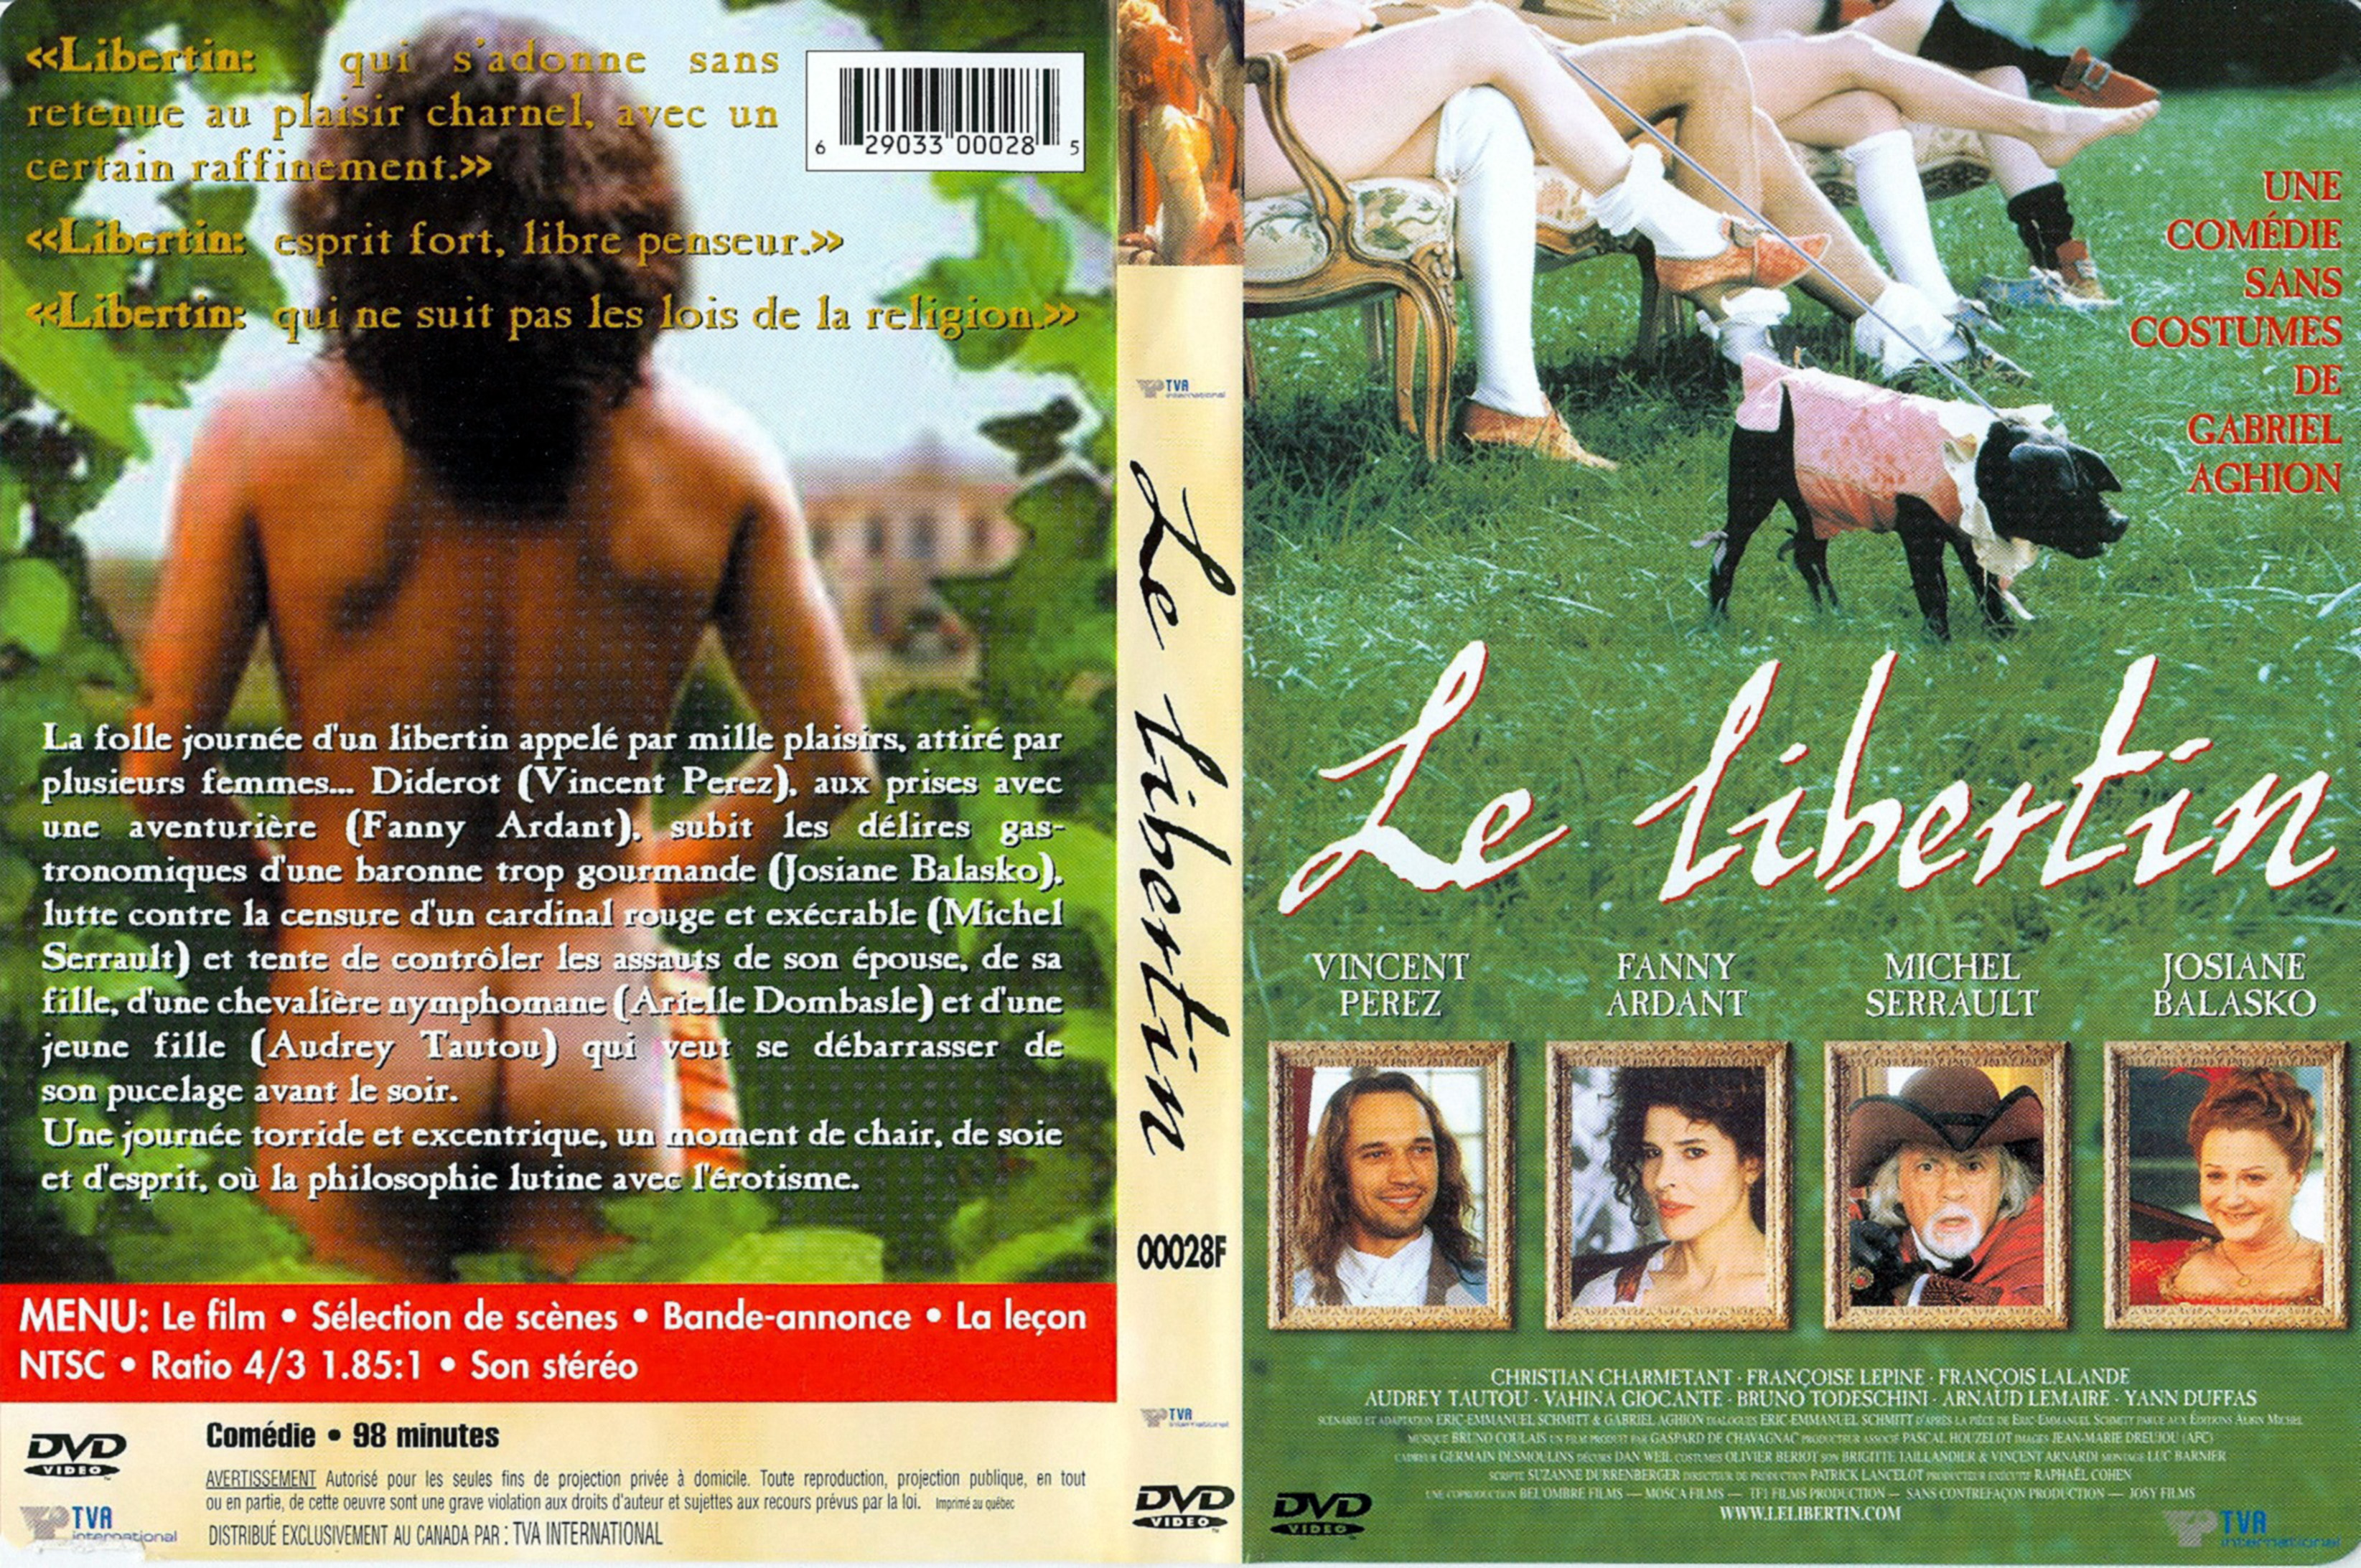 Jaquette DVD Le libertin v2